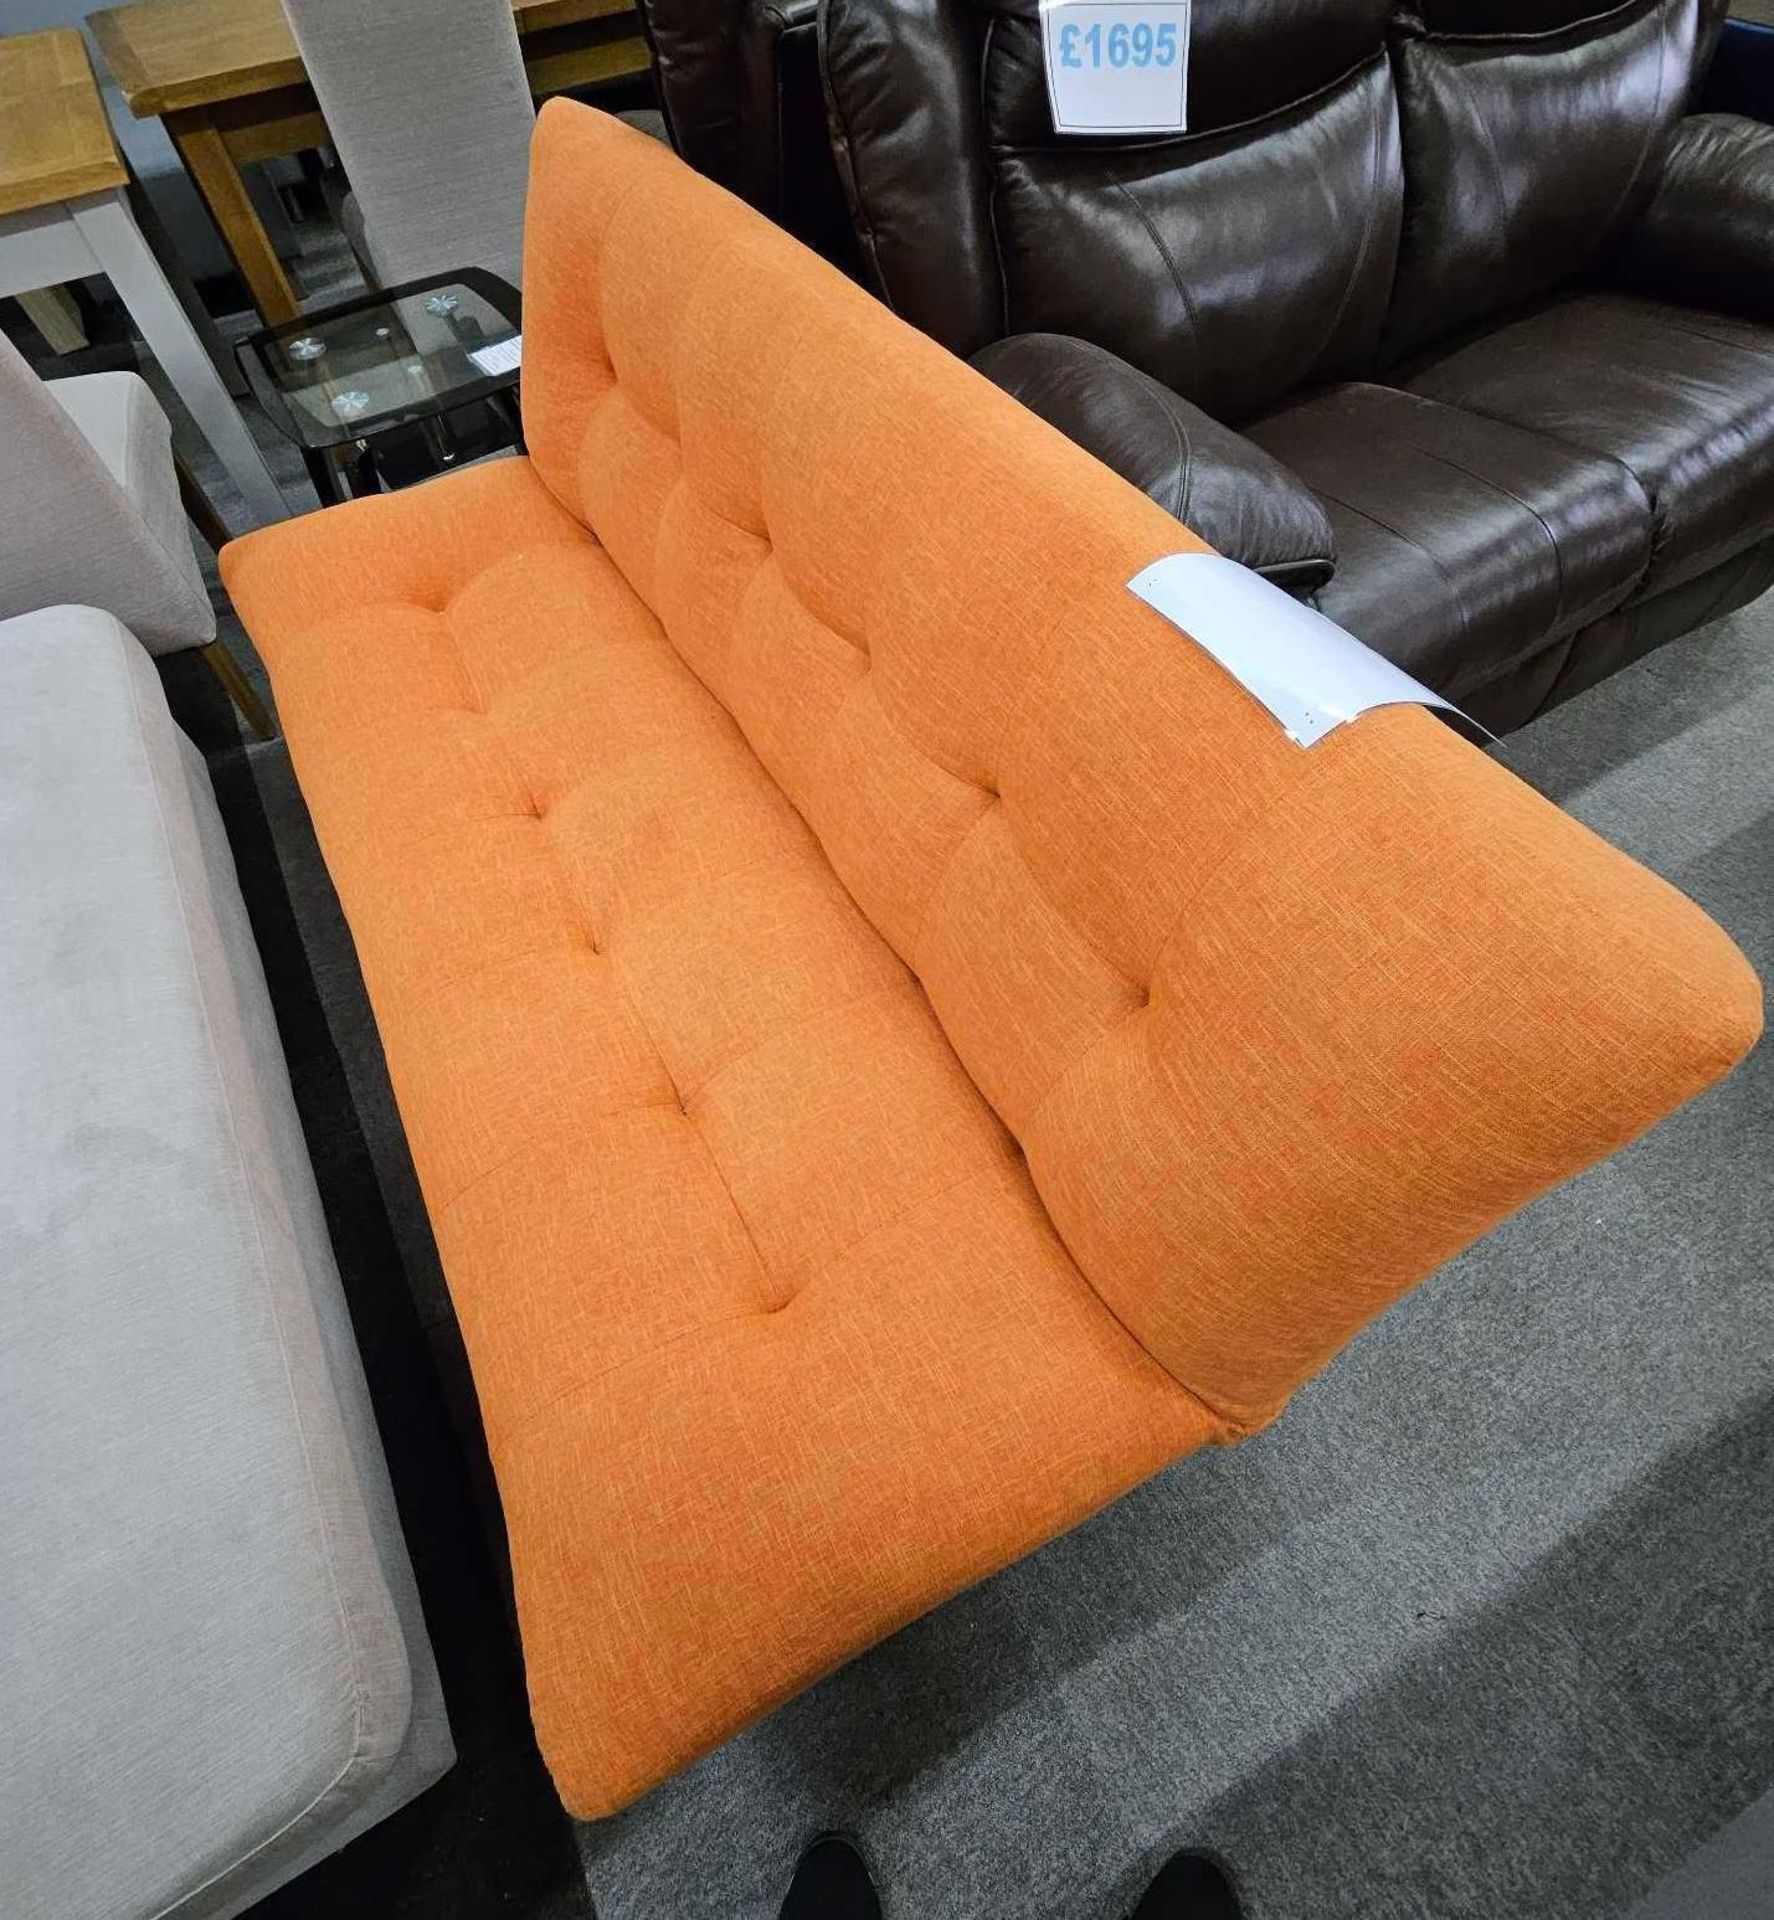 *EX DISPLAY* Habitat kota clic clac heavy duty 3 seater fabric sofa bed in orange. RRP: £525.00 - Image 3 of 5